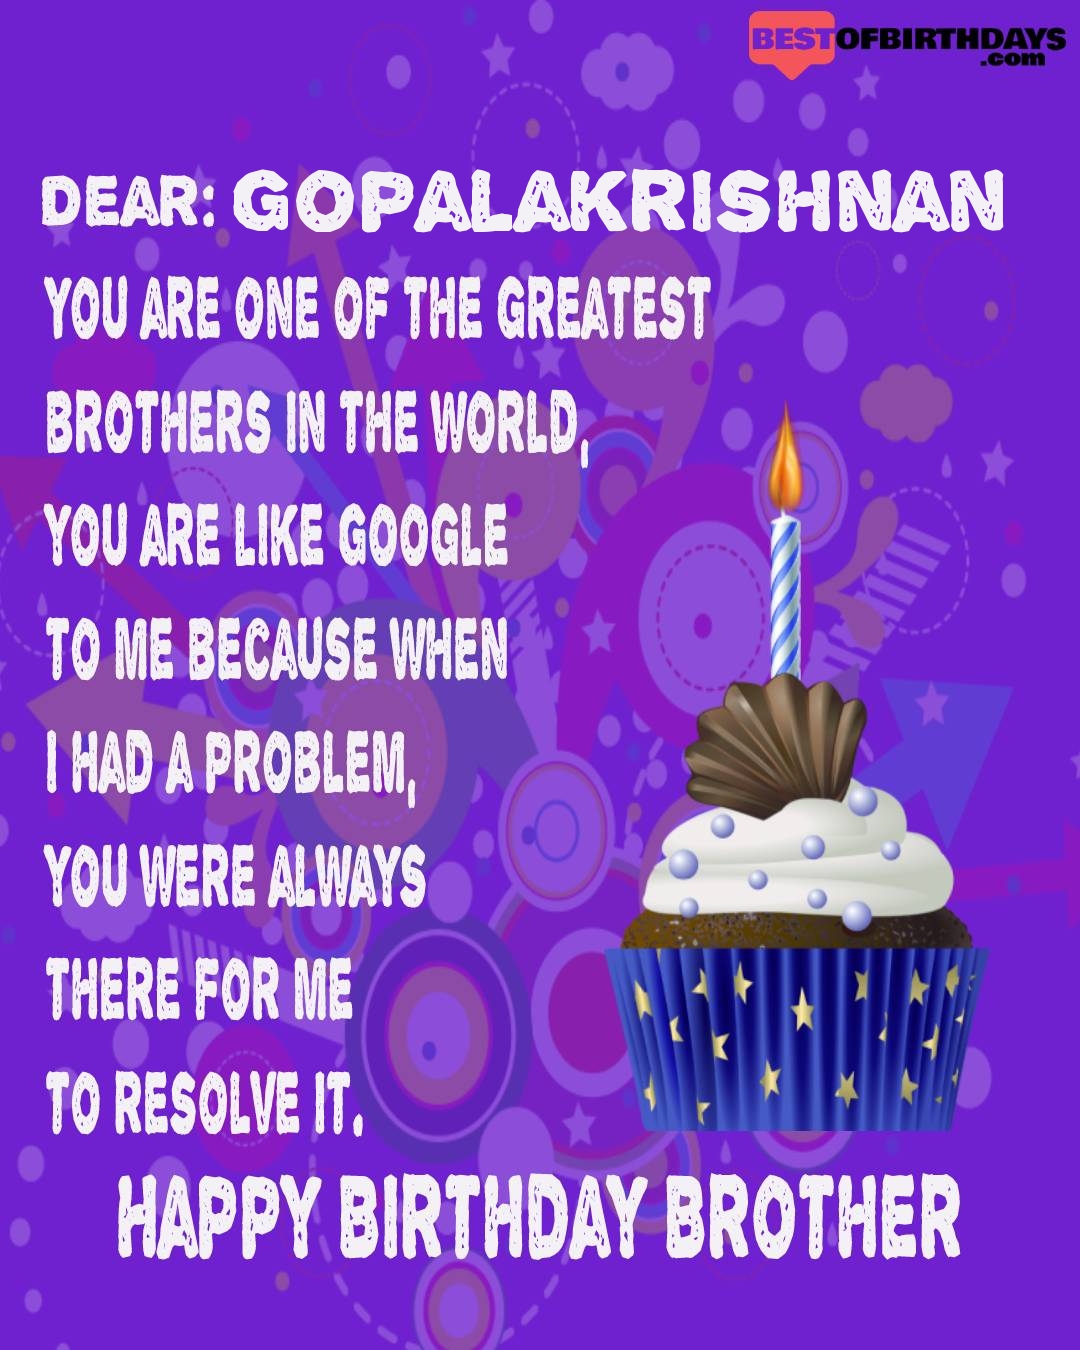 Happy birthday gopalakrishnan bhai brother bro